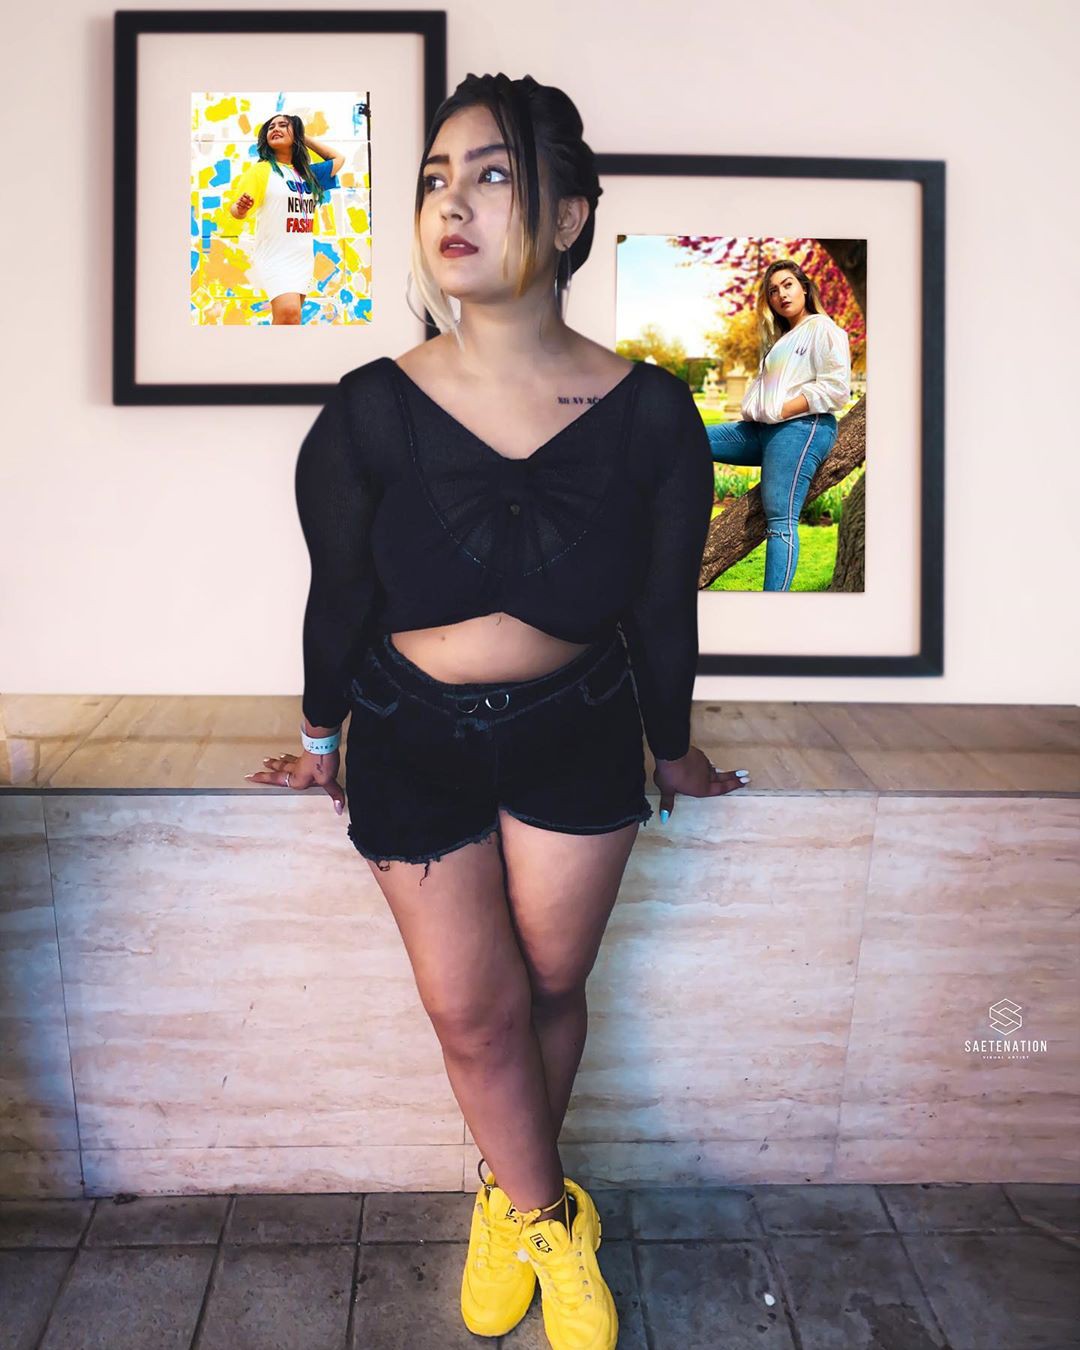 Stunning Instagram Pics of Indian TikTok Star Aashika Bhatia: Hot Girls Instagram,  Viral TikTok Girls,  Aashika Bhatia Sexy Pictures,  Aashika Bhatia Instagram,  Aashika Bhatia TikTok,  TikTok Girls,  TikTok Girl Aashika Bhatia,  Hot TikTok Models  